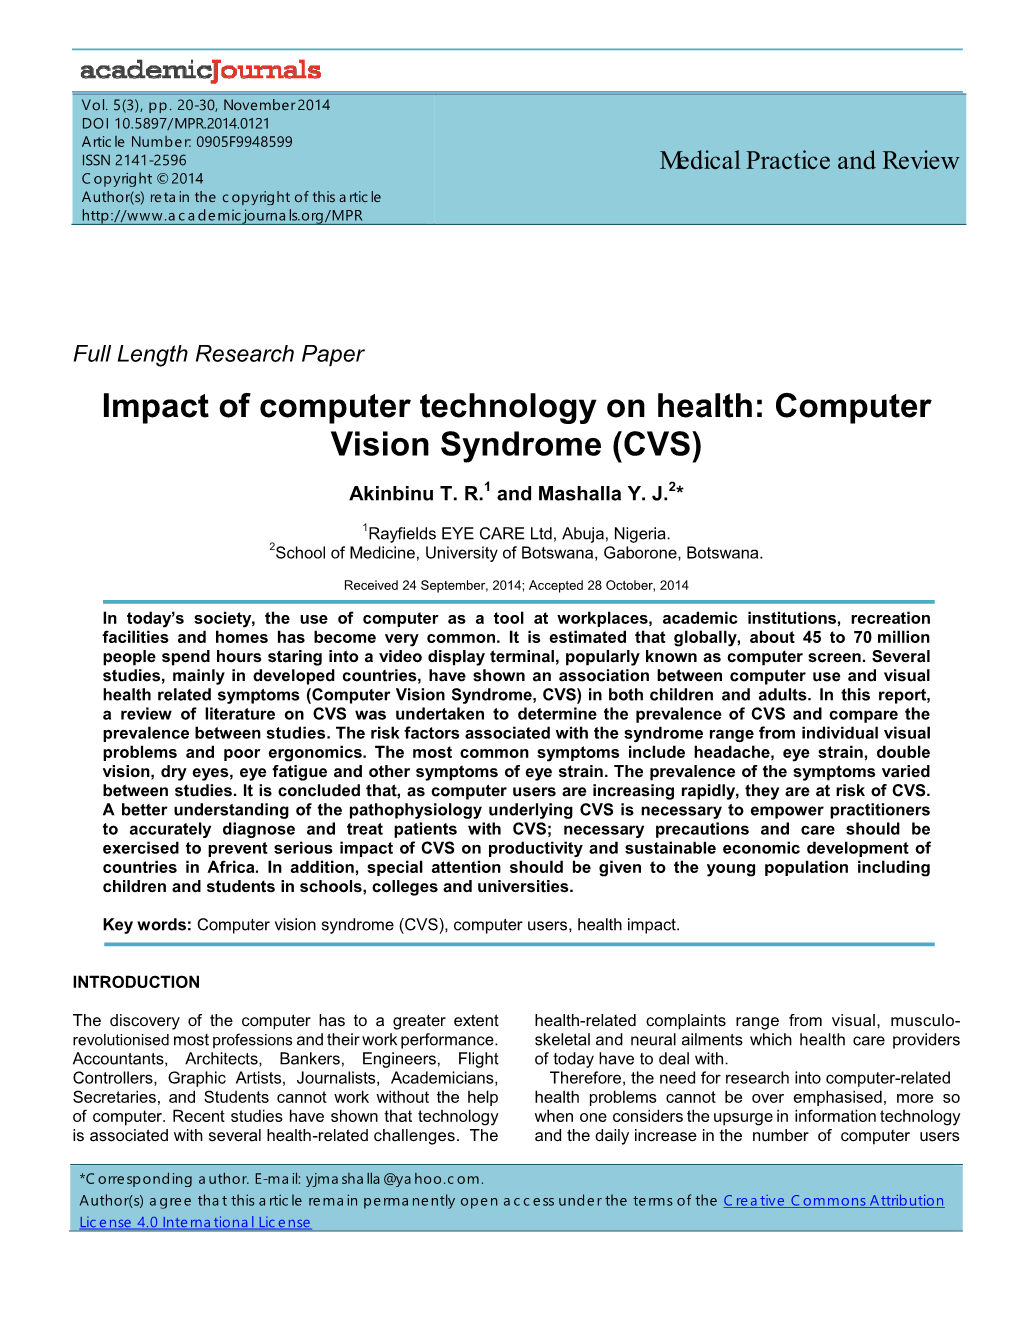 Computer Vision Syndrome (CVS)